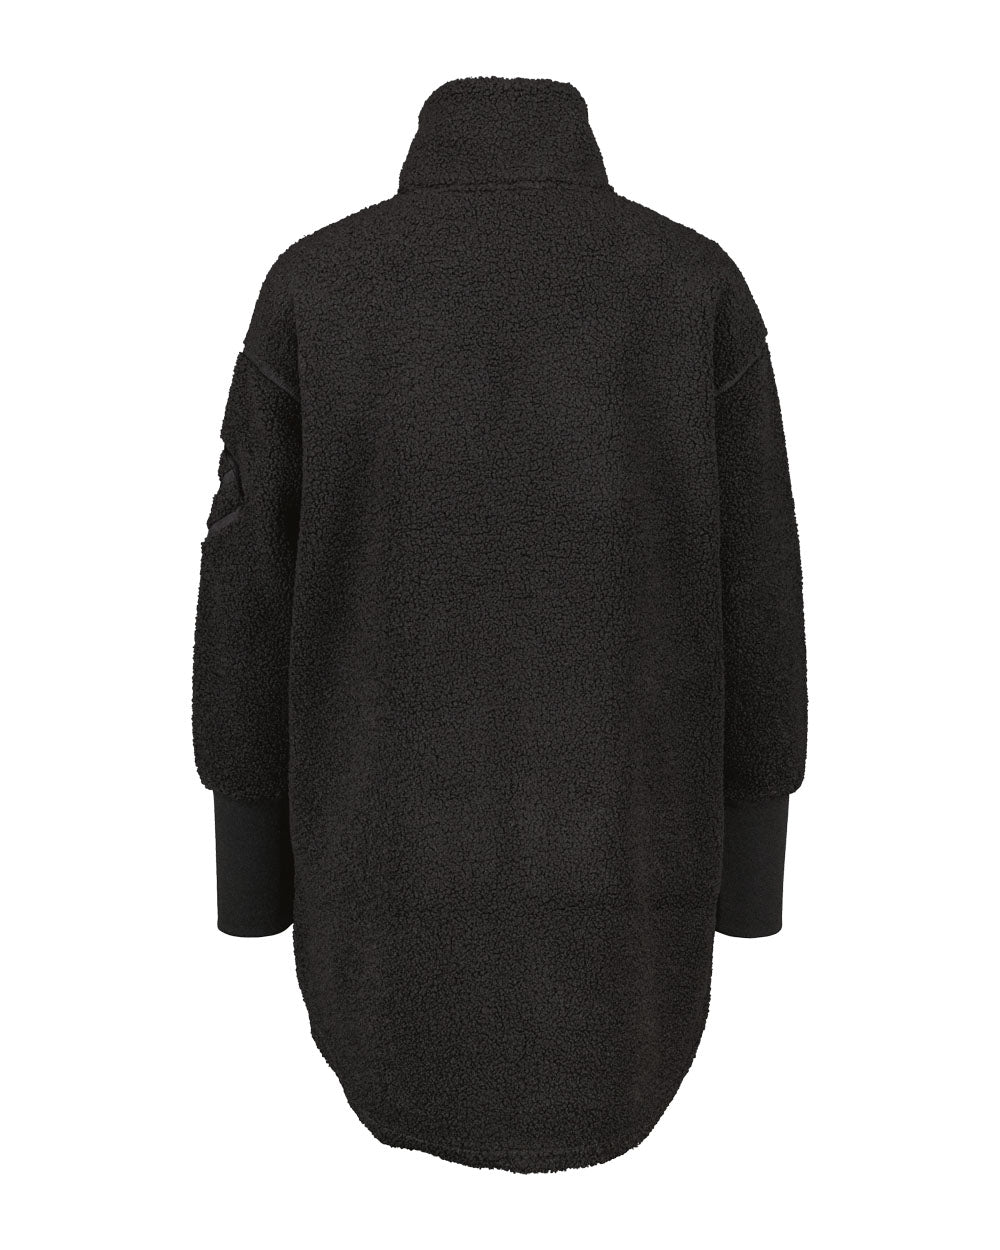 Black coloured Didriksons Full-Zip Jacket on White background 